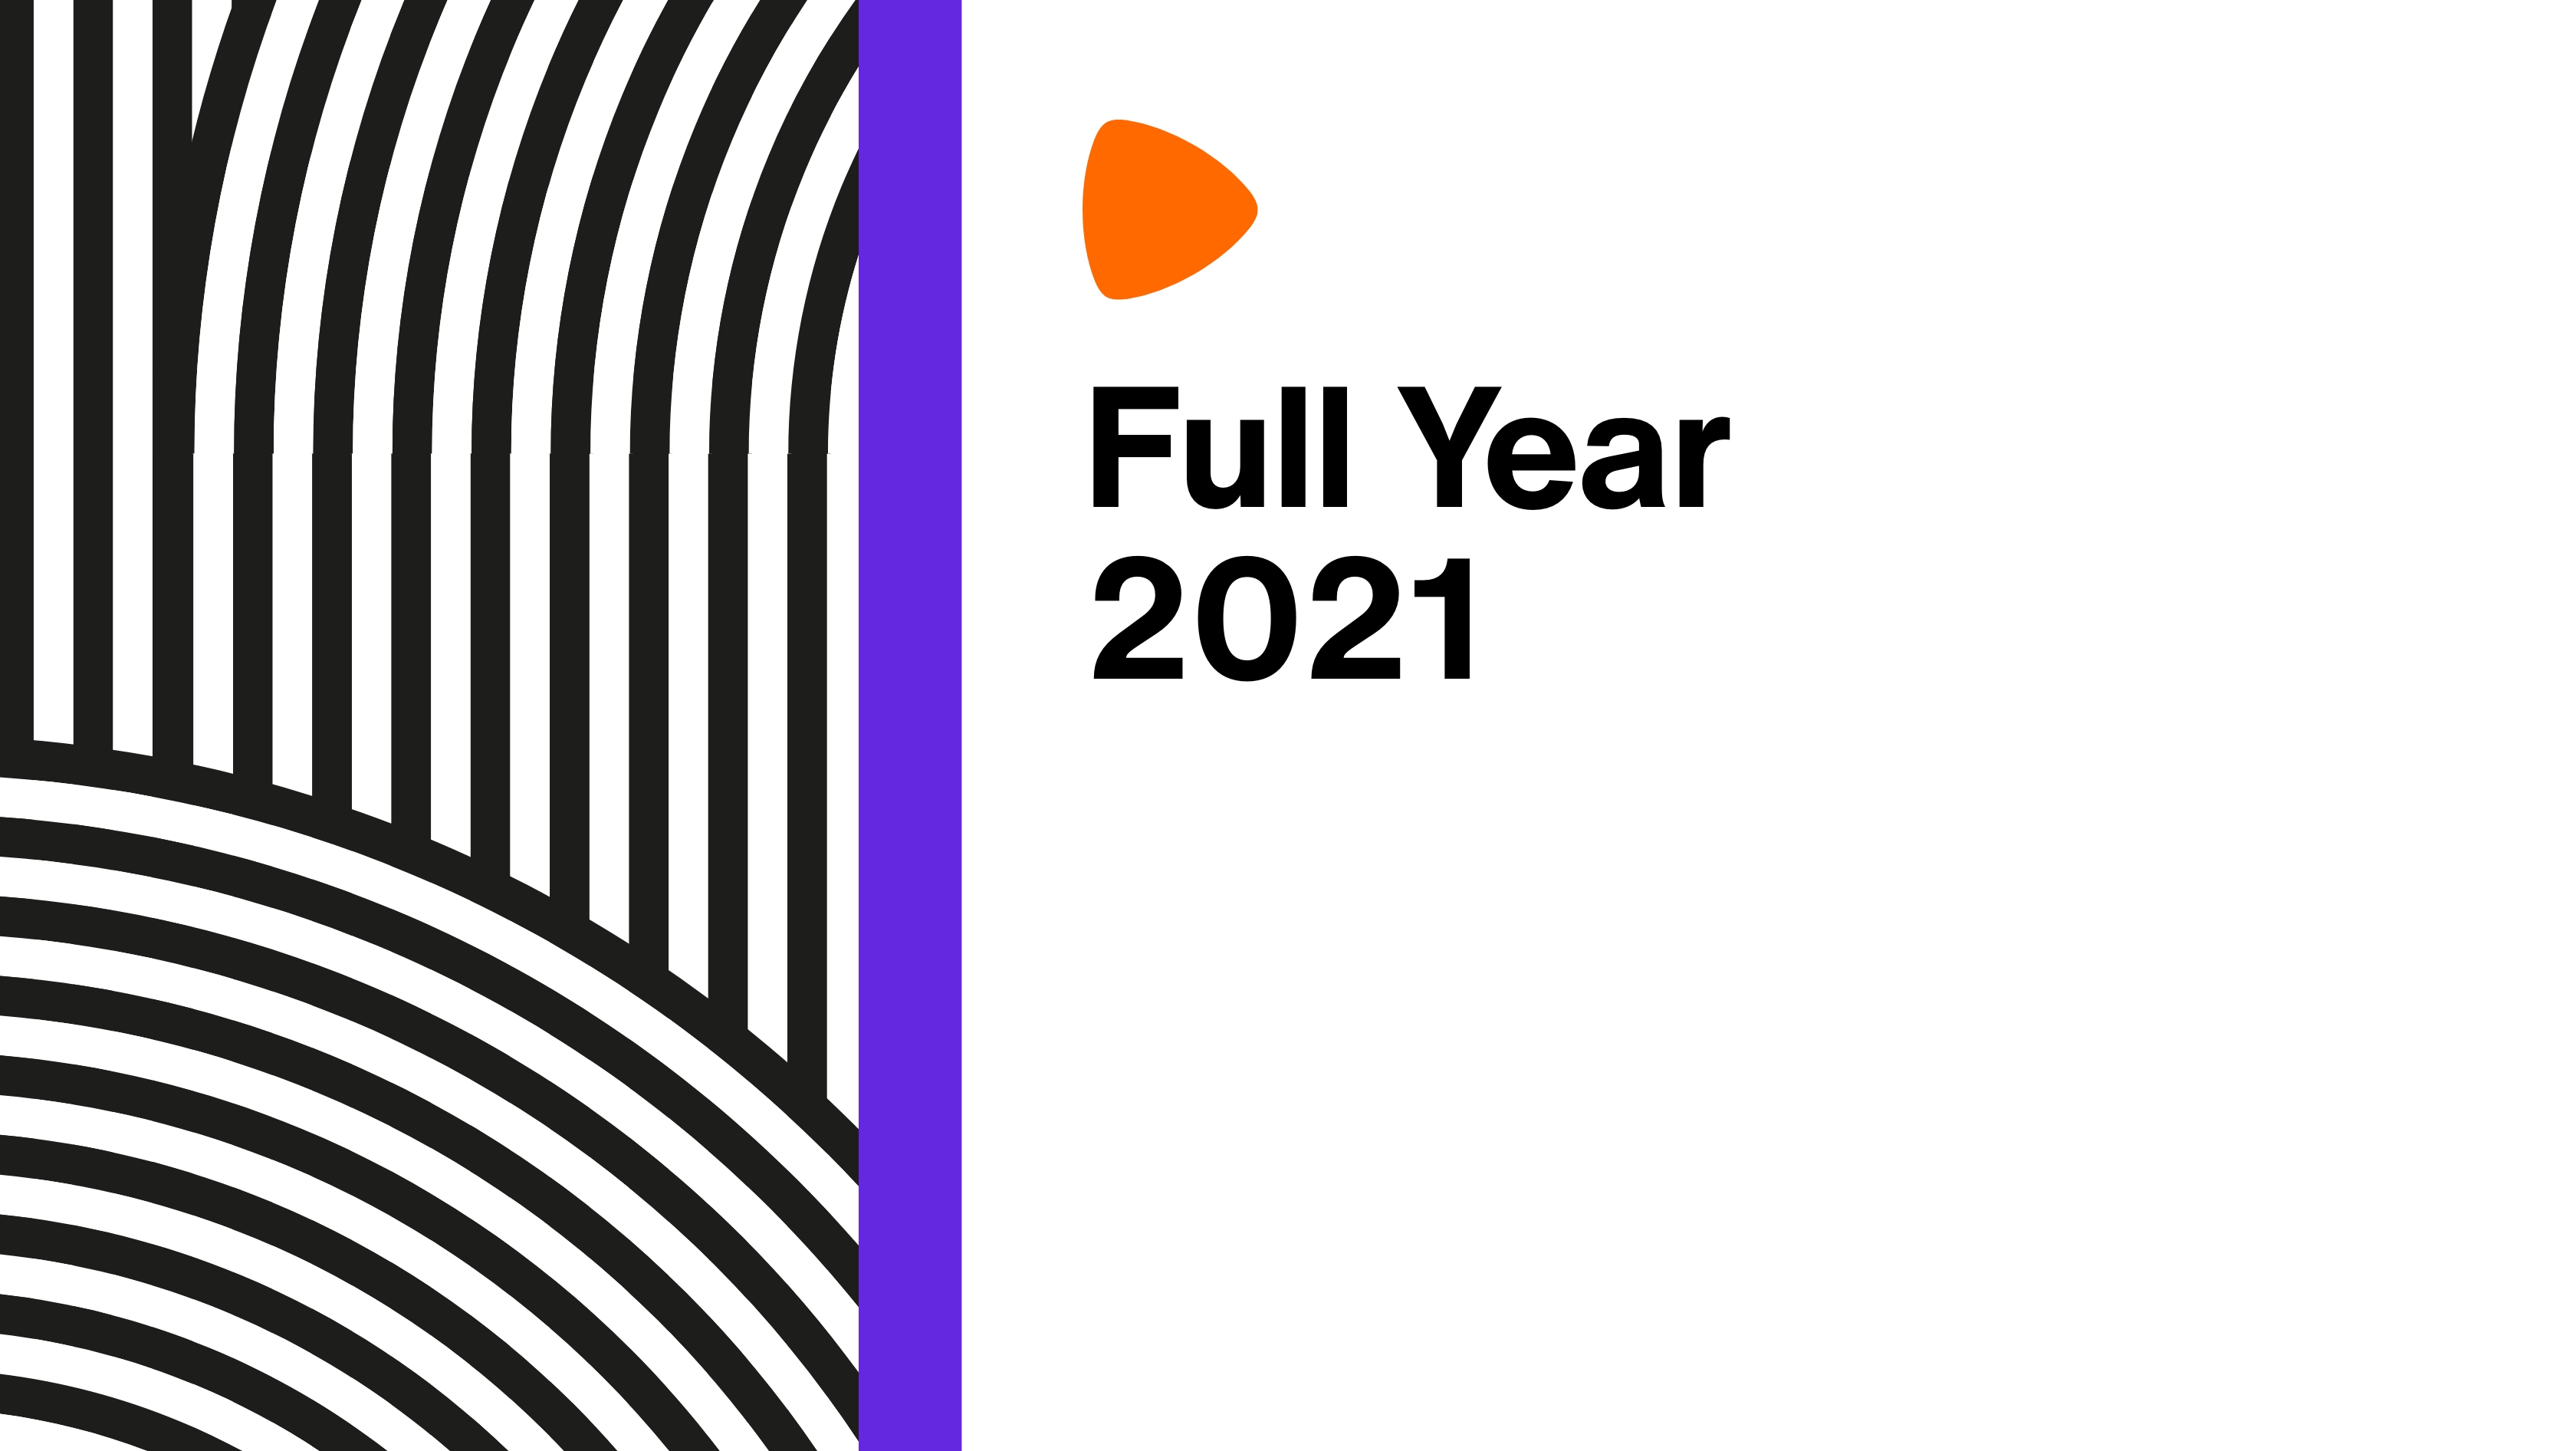 Full year 2021